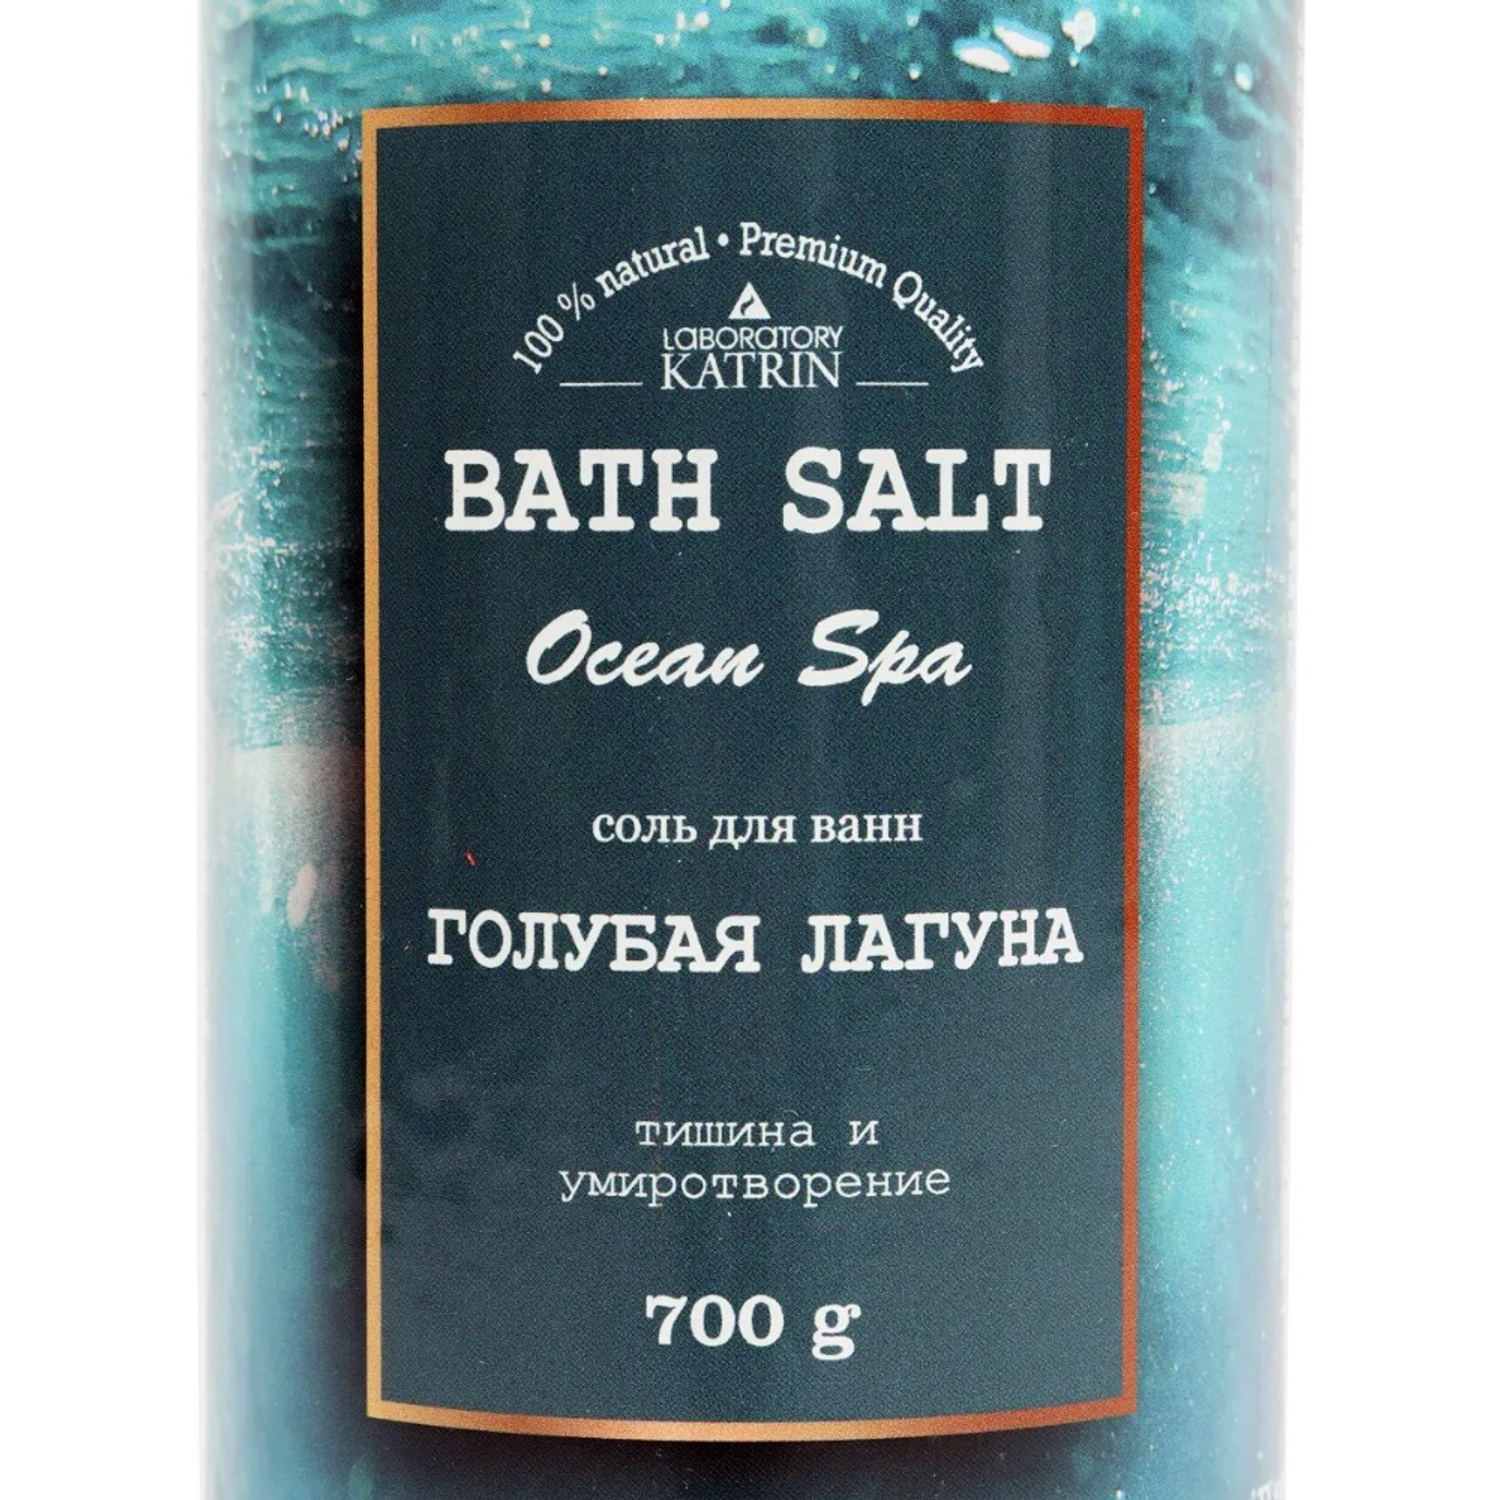 Морская соль для ванны Laboratory KATRIN Ocean Spa Голубая лагуна 700гр - фото 7